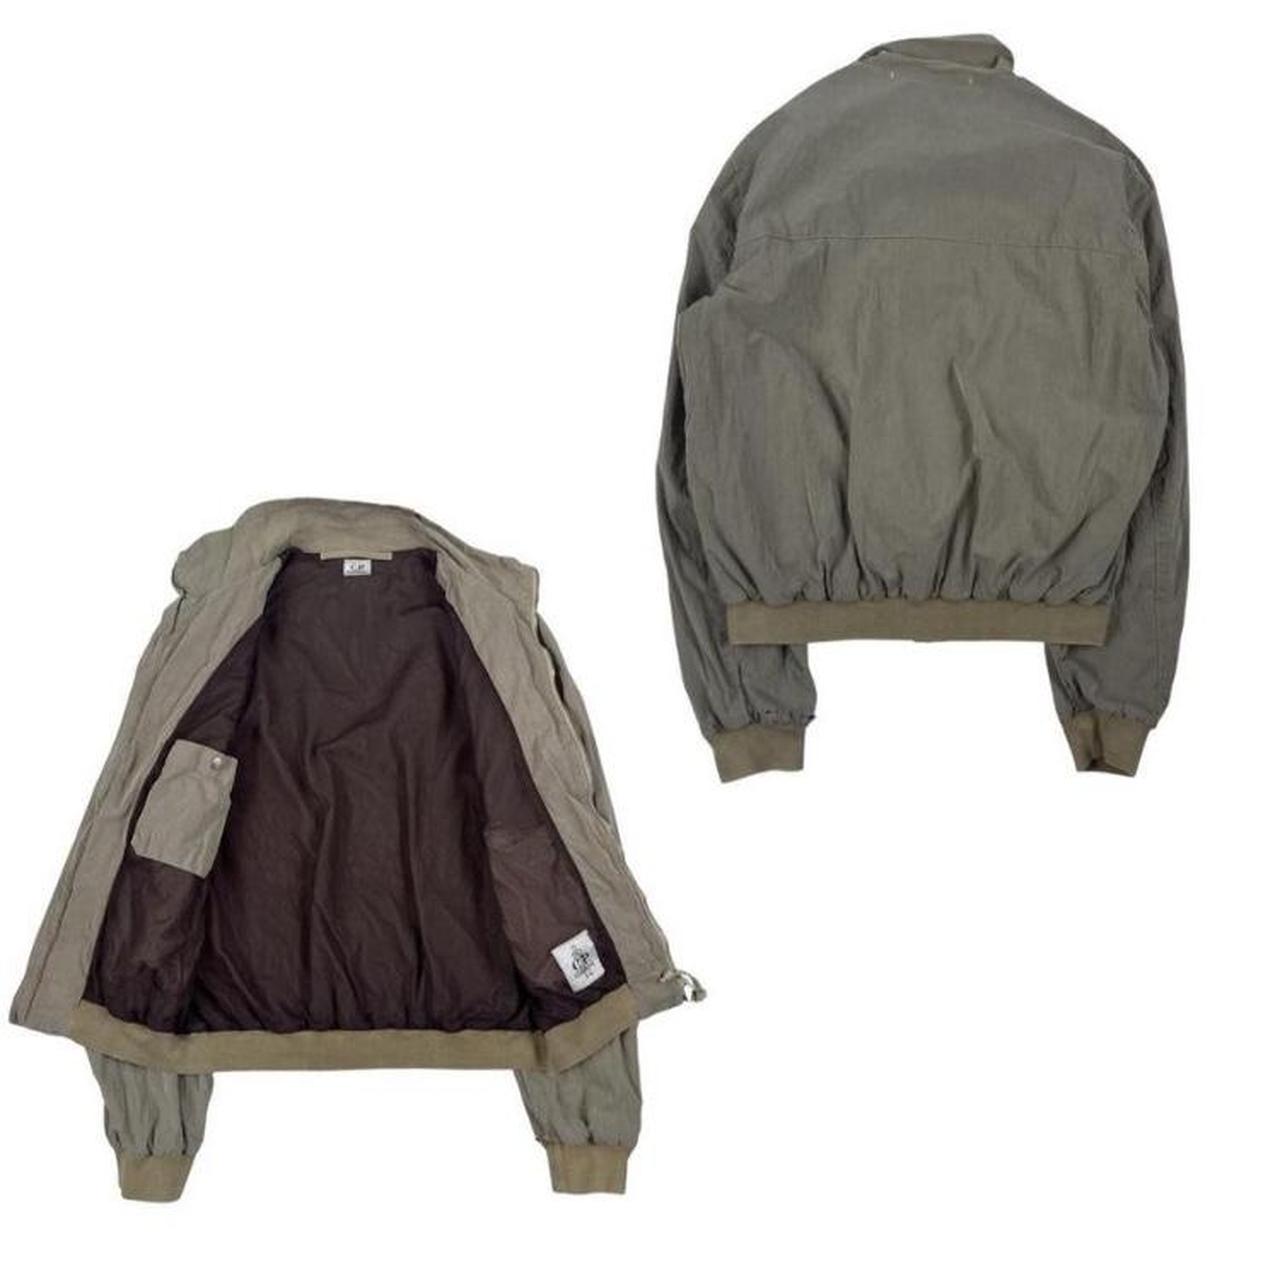 Vintage CP Company Jacket S/S 2005, Grey / Beige.... - Depop